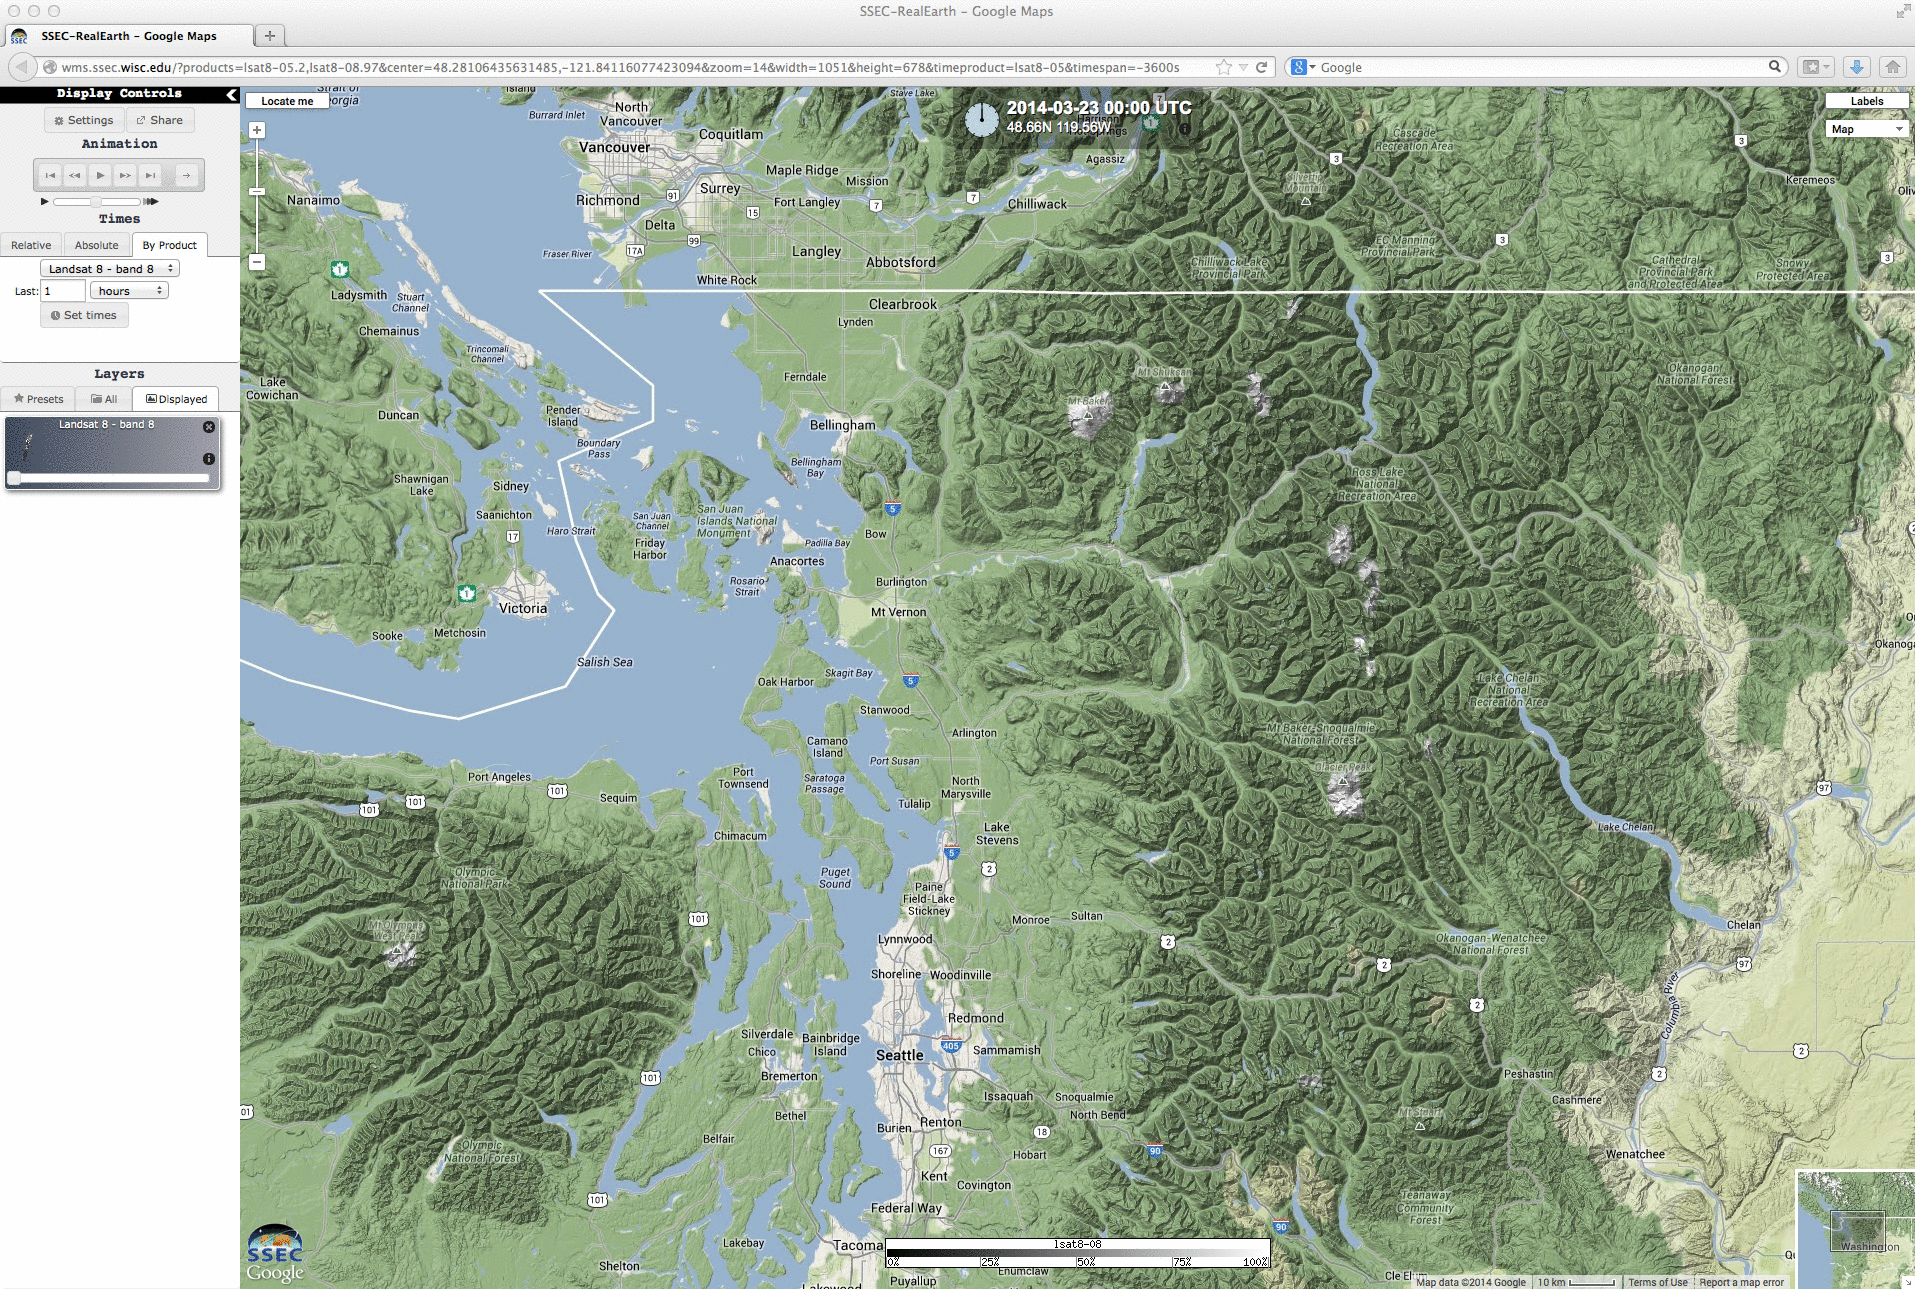 Landsat-8 0.59 Âµm panochromatic visible image of the Washington State landslide site